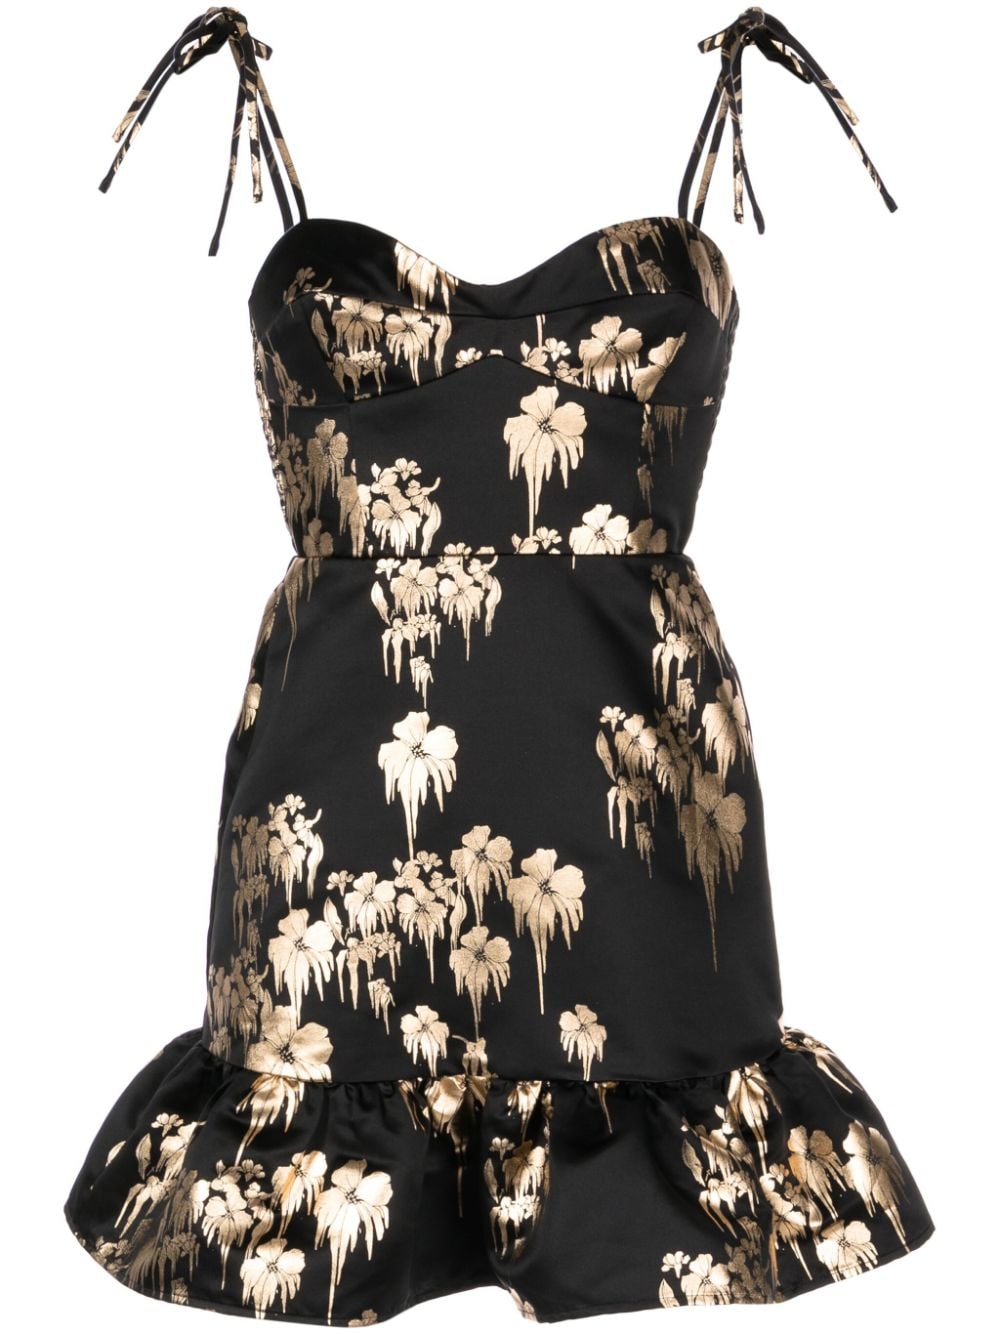 Cynthia Rowley floral-print foiled-finish minidress - Black